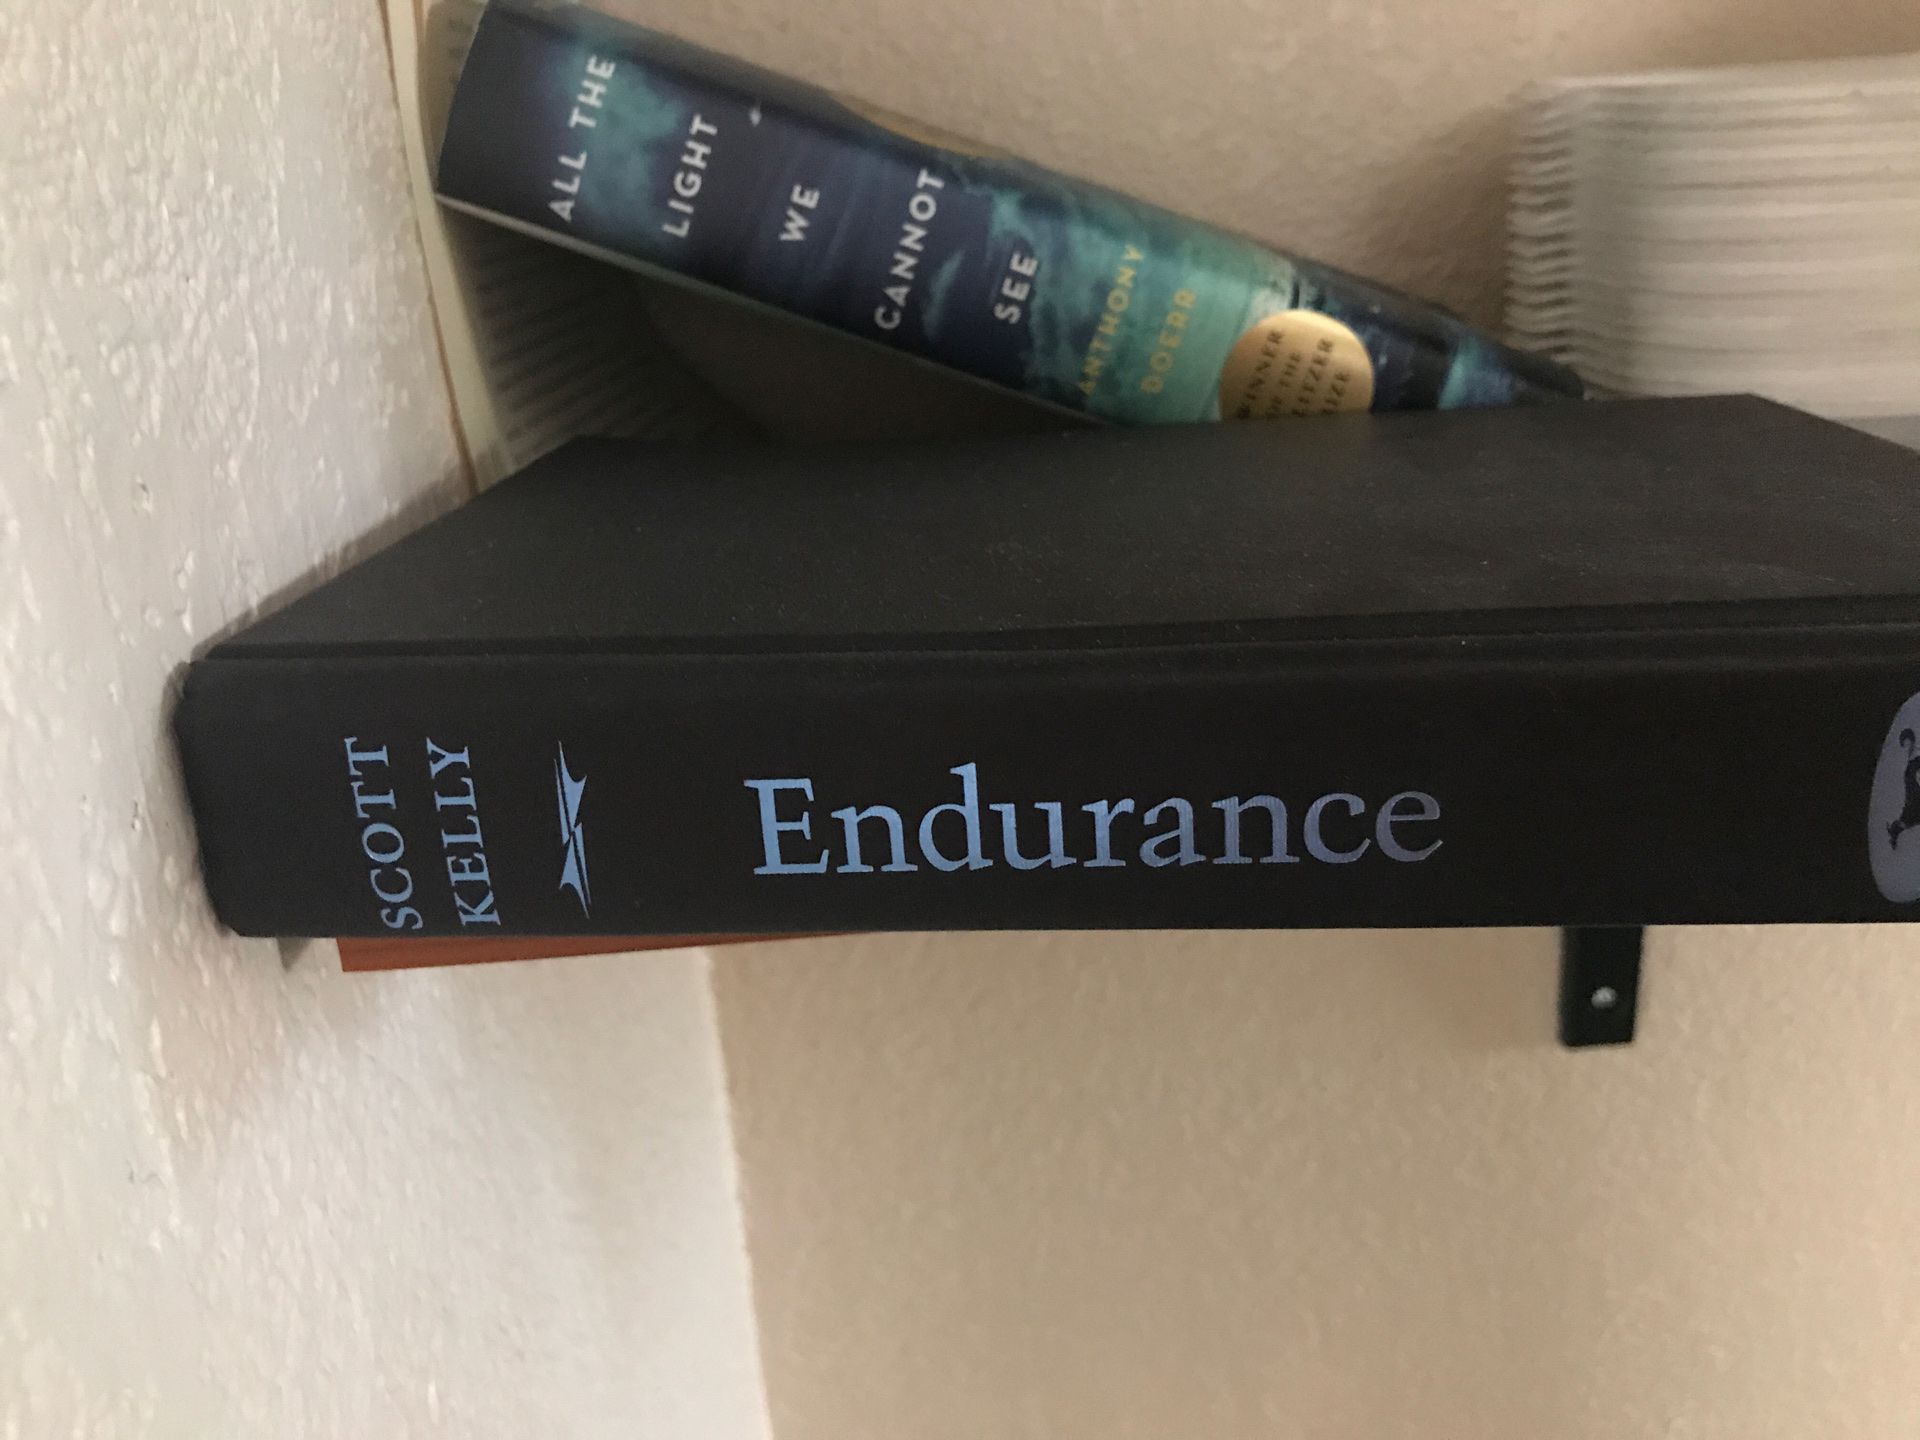 Scott Kelly Endurance hardcover